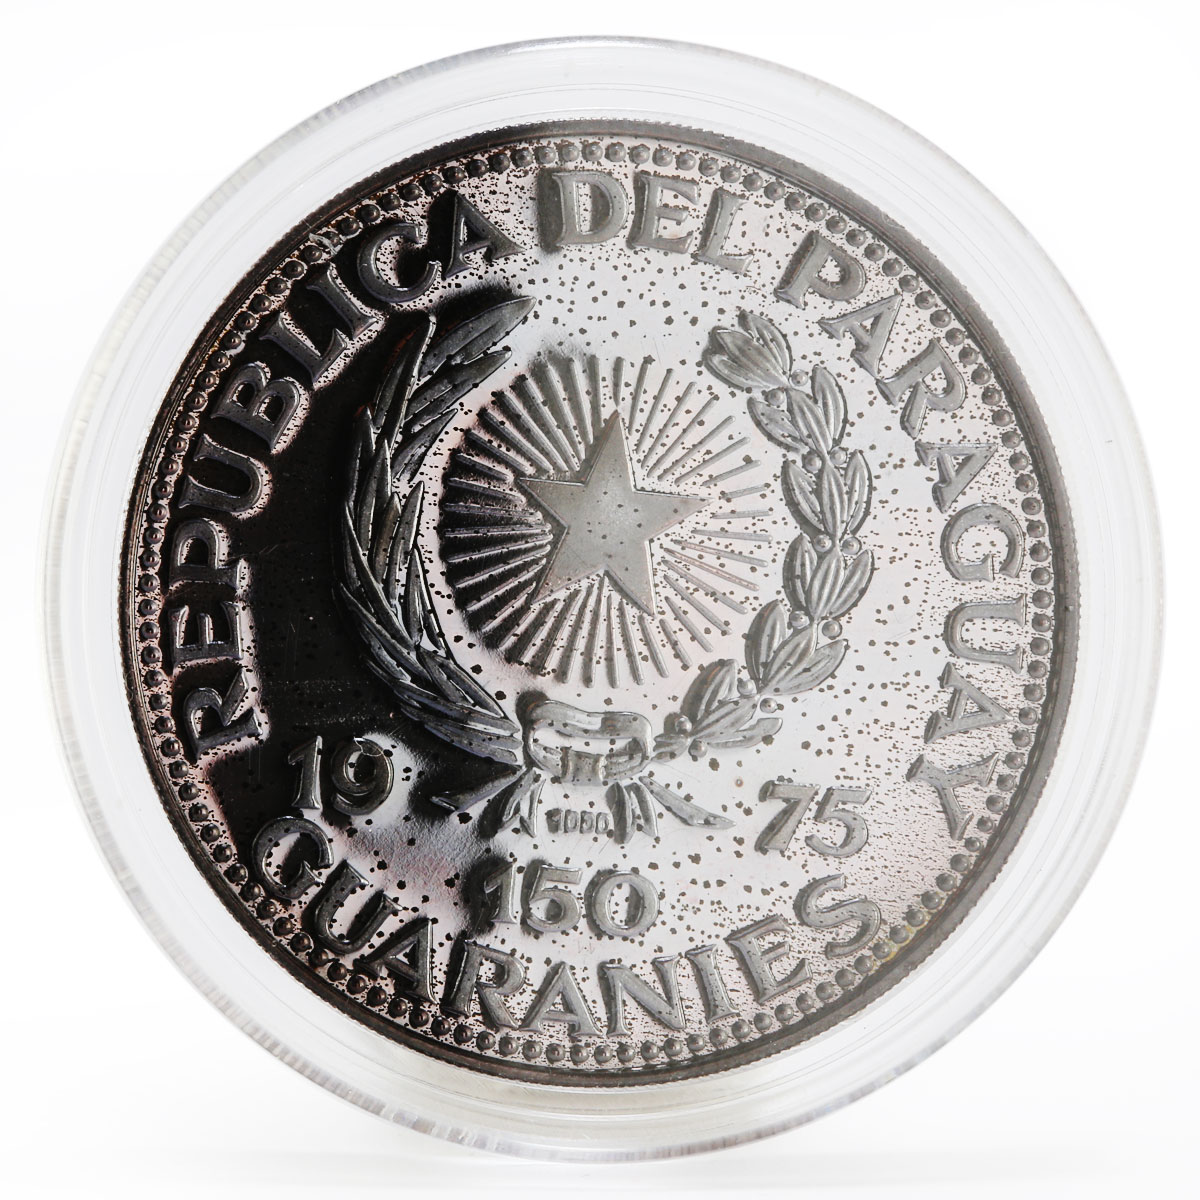 Paraguay 150 guaranies Apollo 15 Scott Worden Irwin proof silver coin 1975